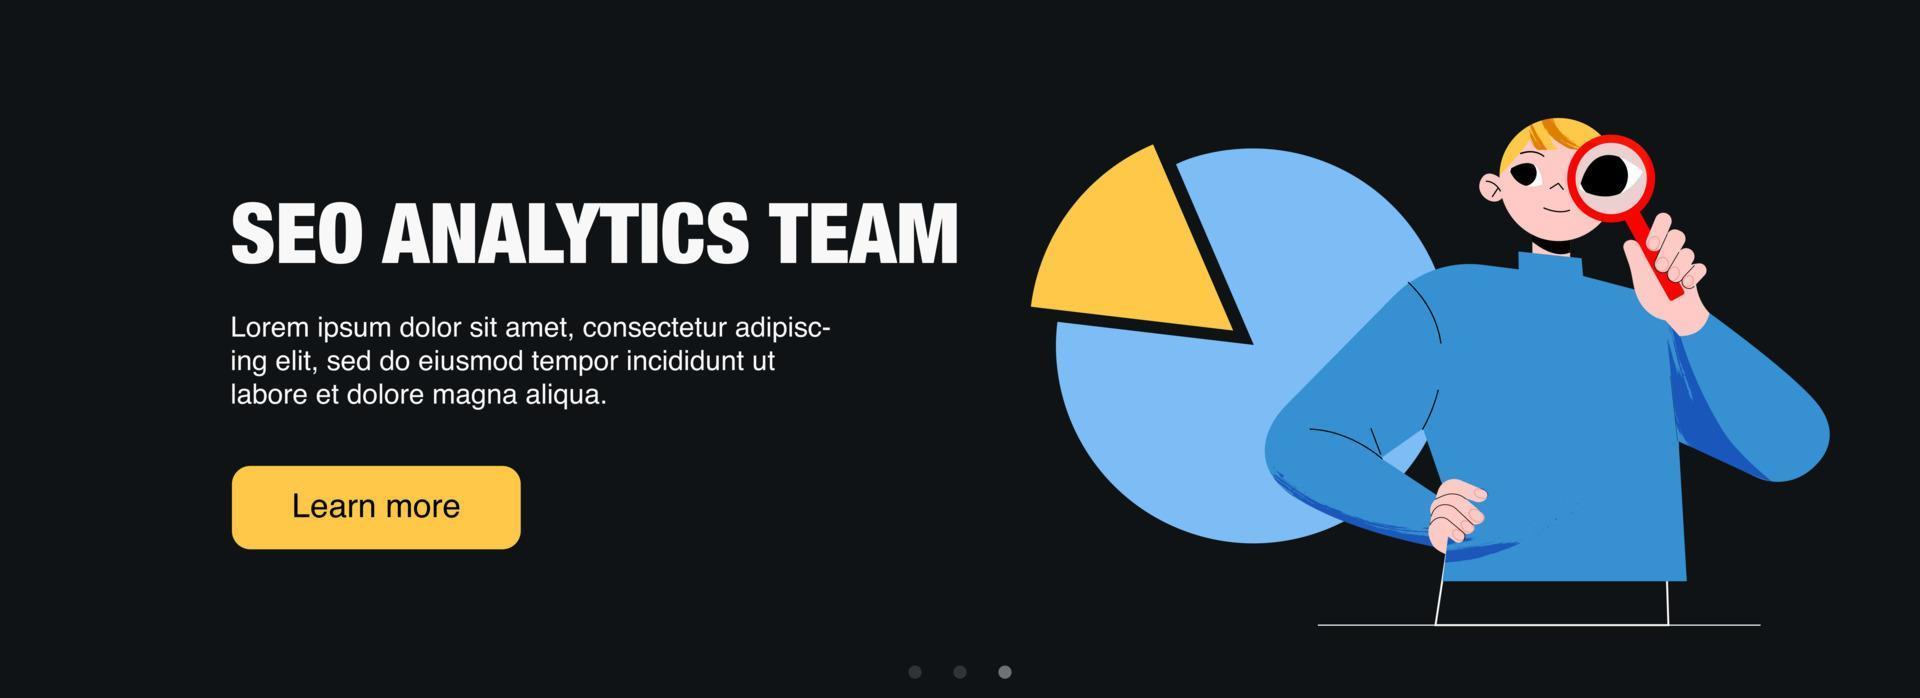 seo analytics team web banier, bedrijf concept vector